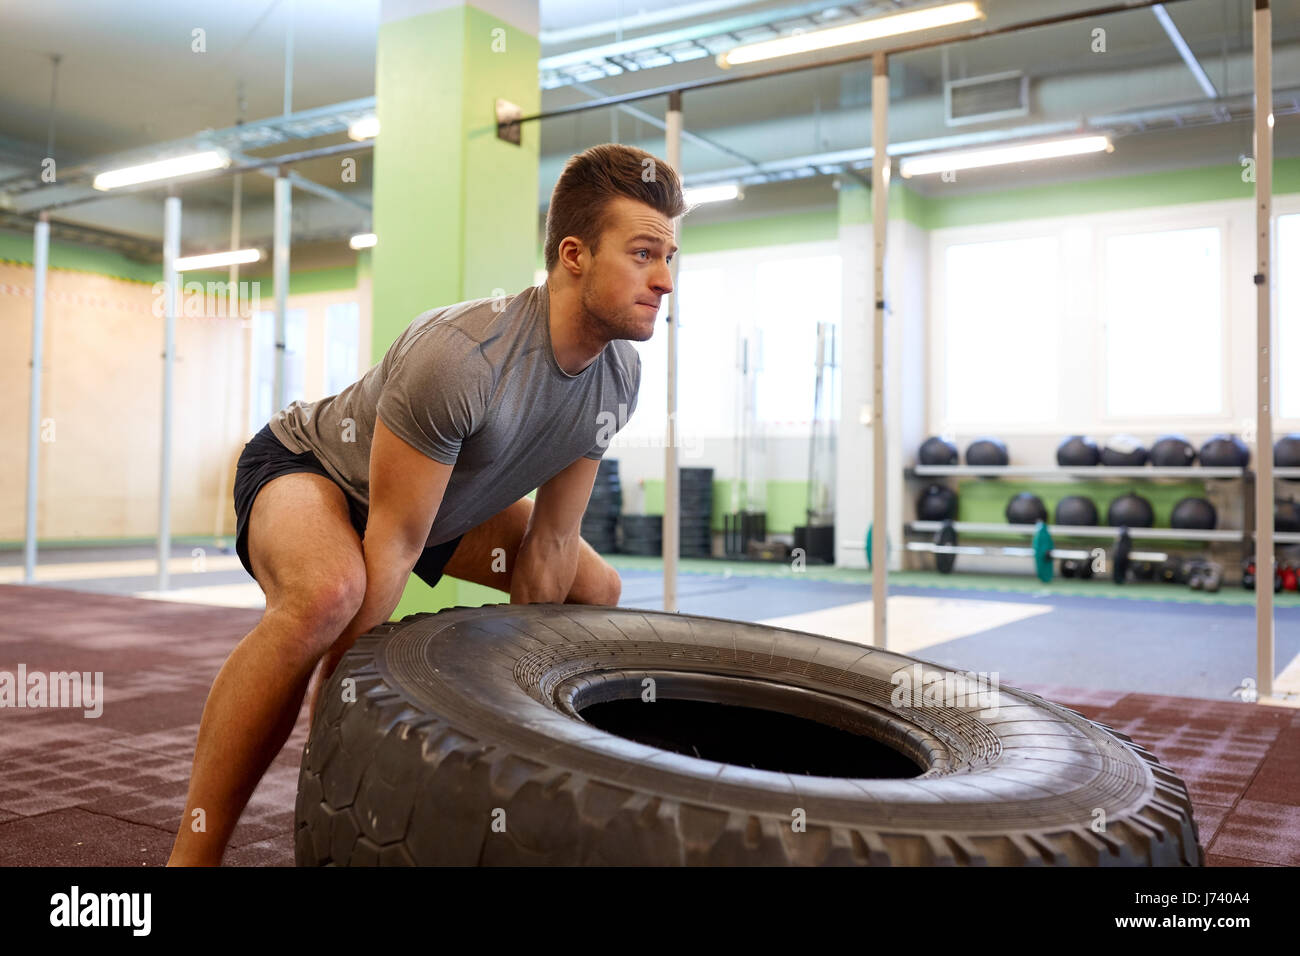 man doing strongman tire flip training in gym Stock Photo